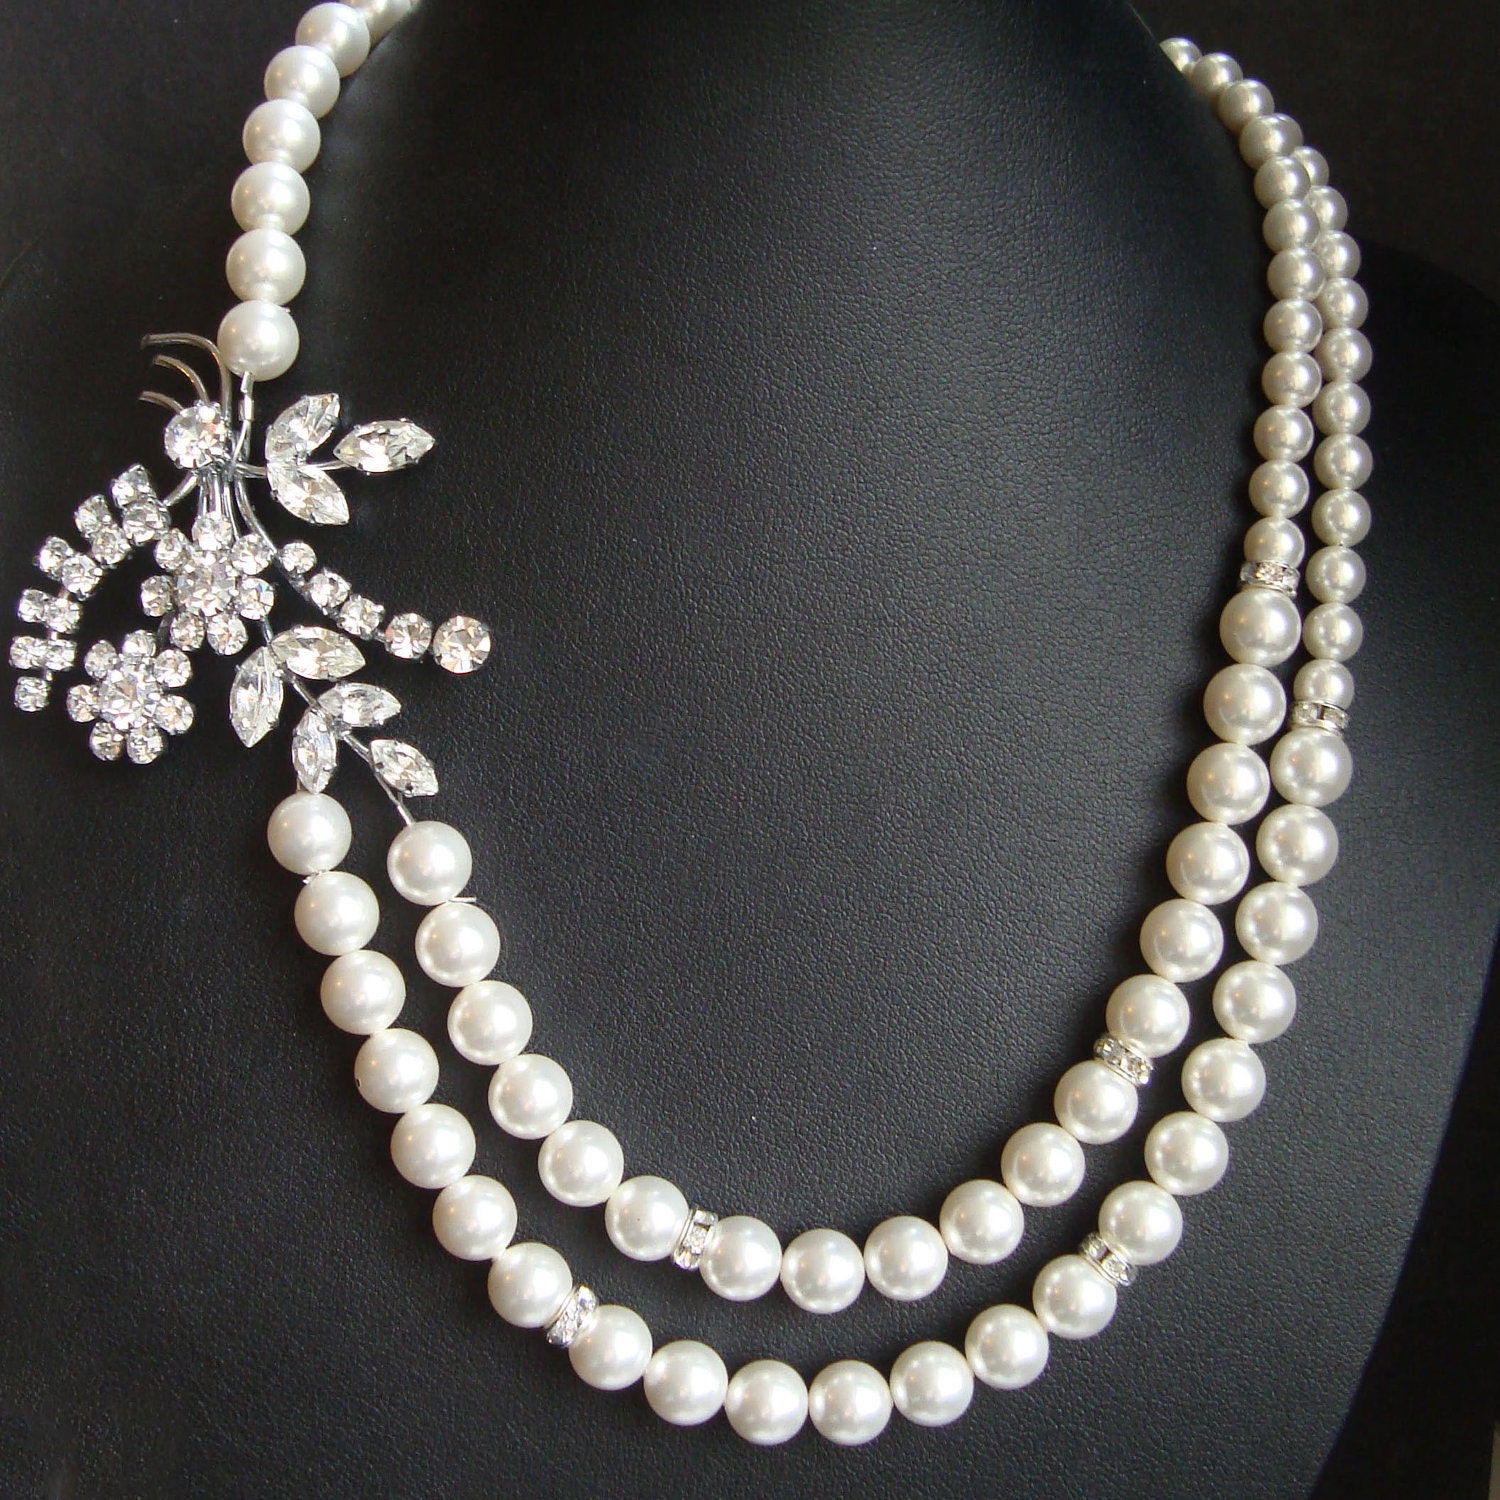 Vintage Rhinestone Brooch Necklace, Swarovski Crystal Pearl Bridal Necklace (one of a kind)